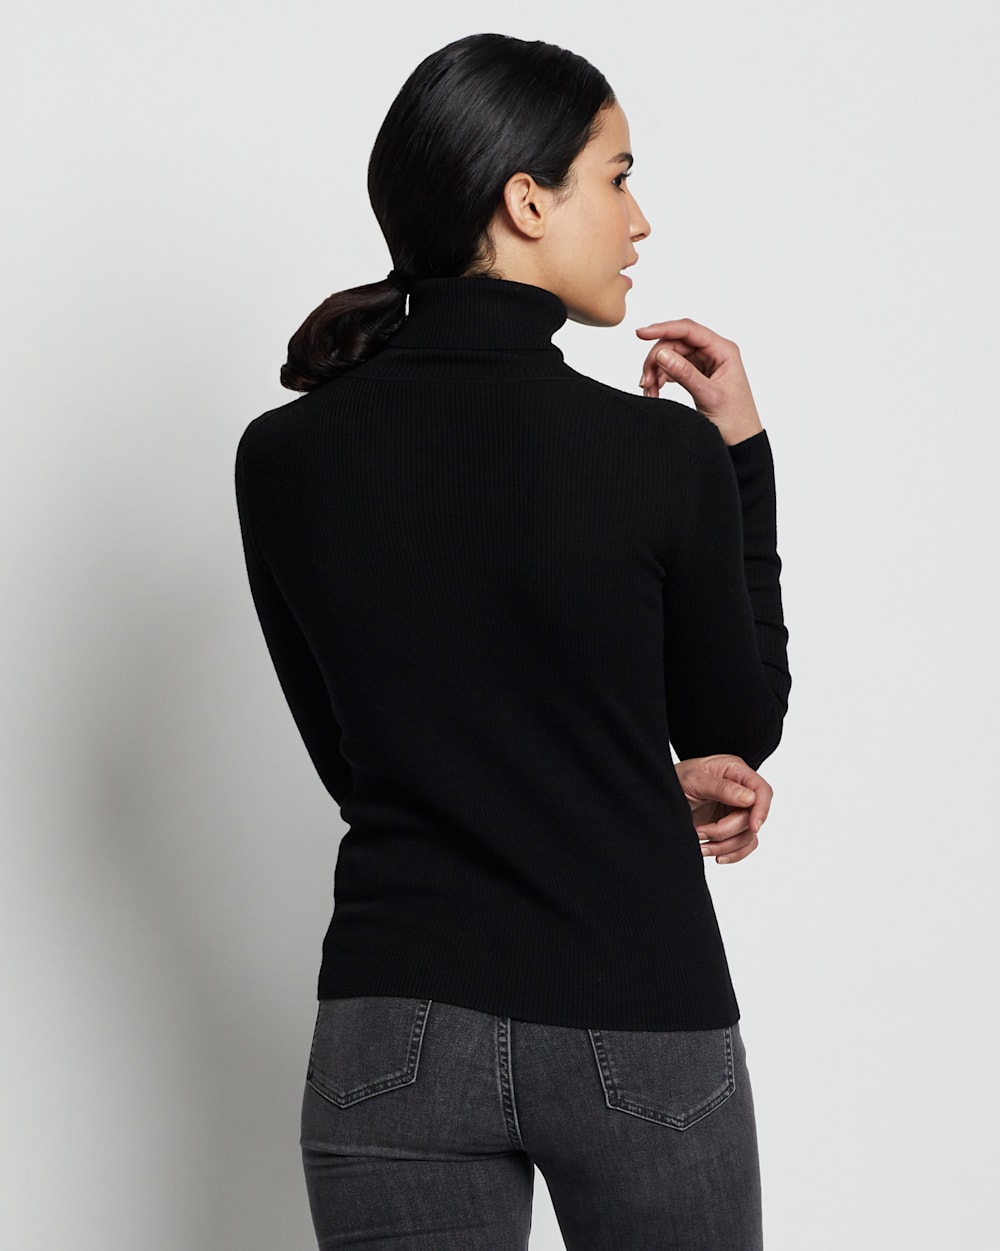 Cozy & Stylish Women's Rib Merino Turtle Neck Sweater